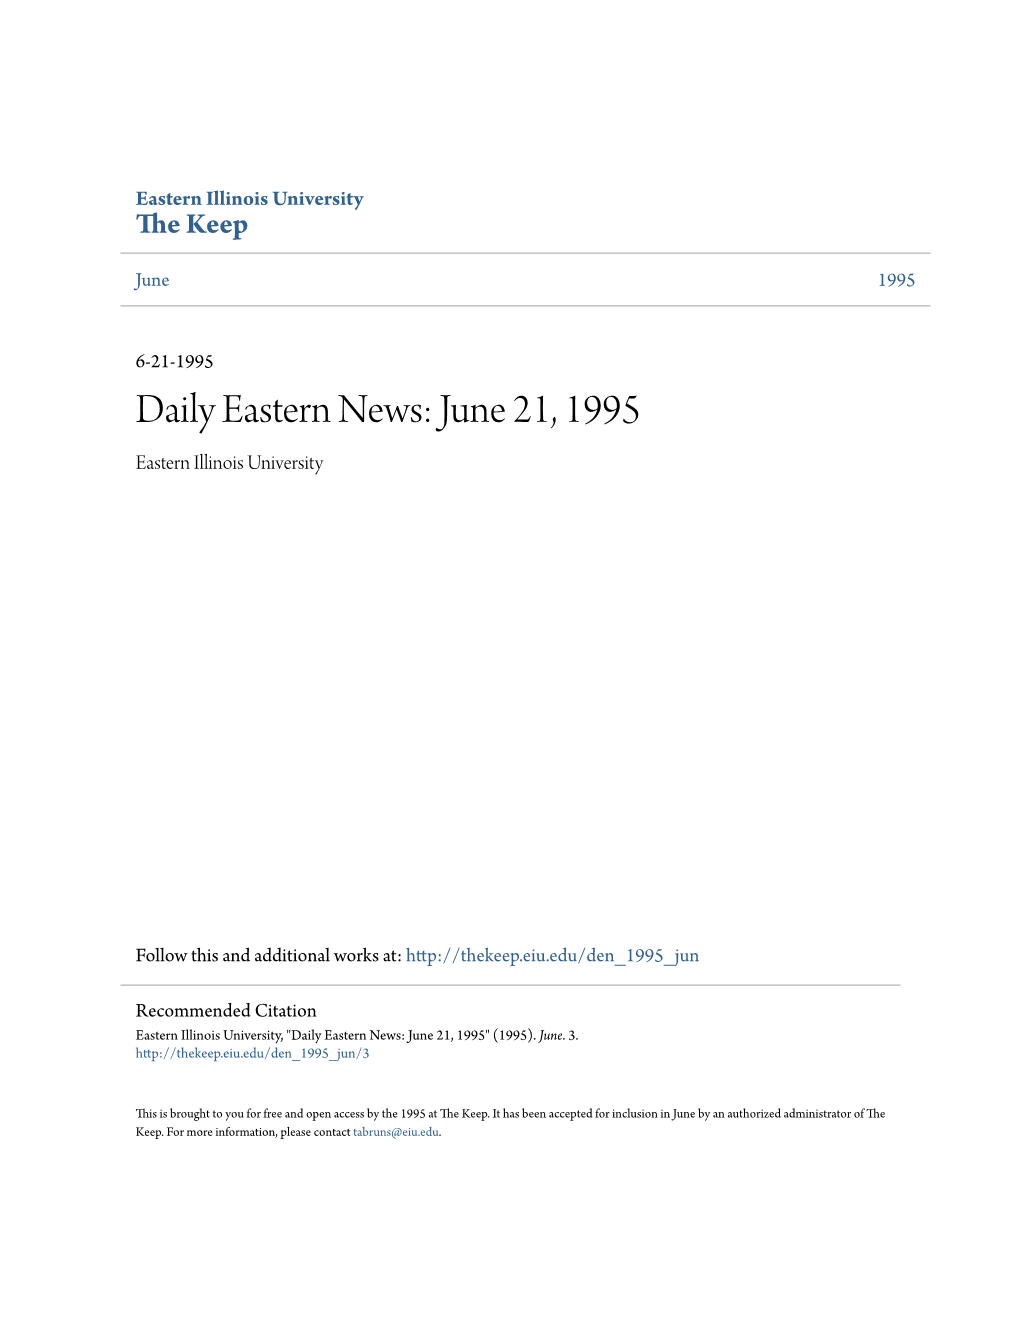 Daily Eastern News: June 21, 1995 Eastern Illinois University